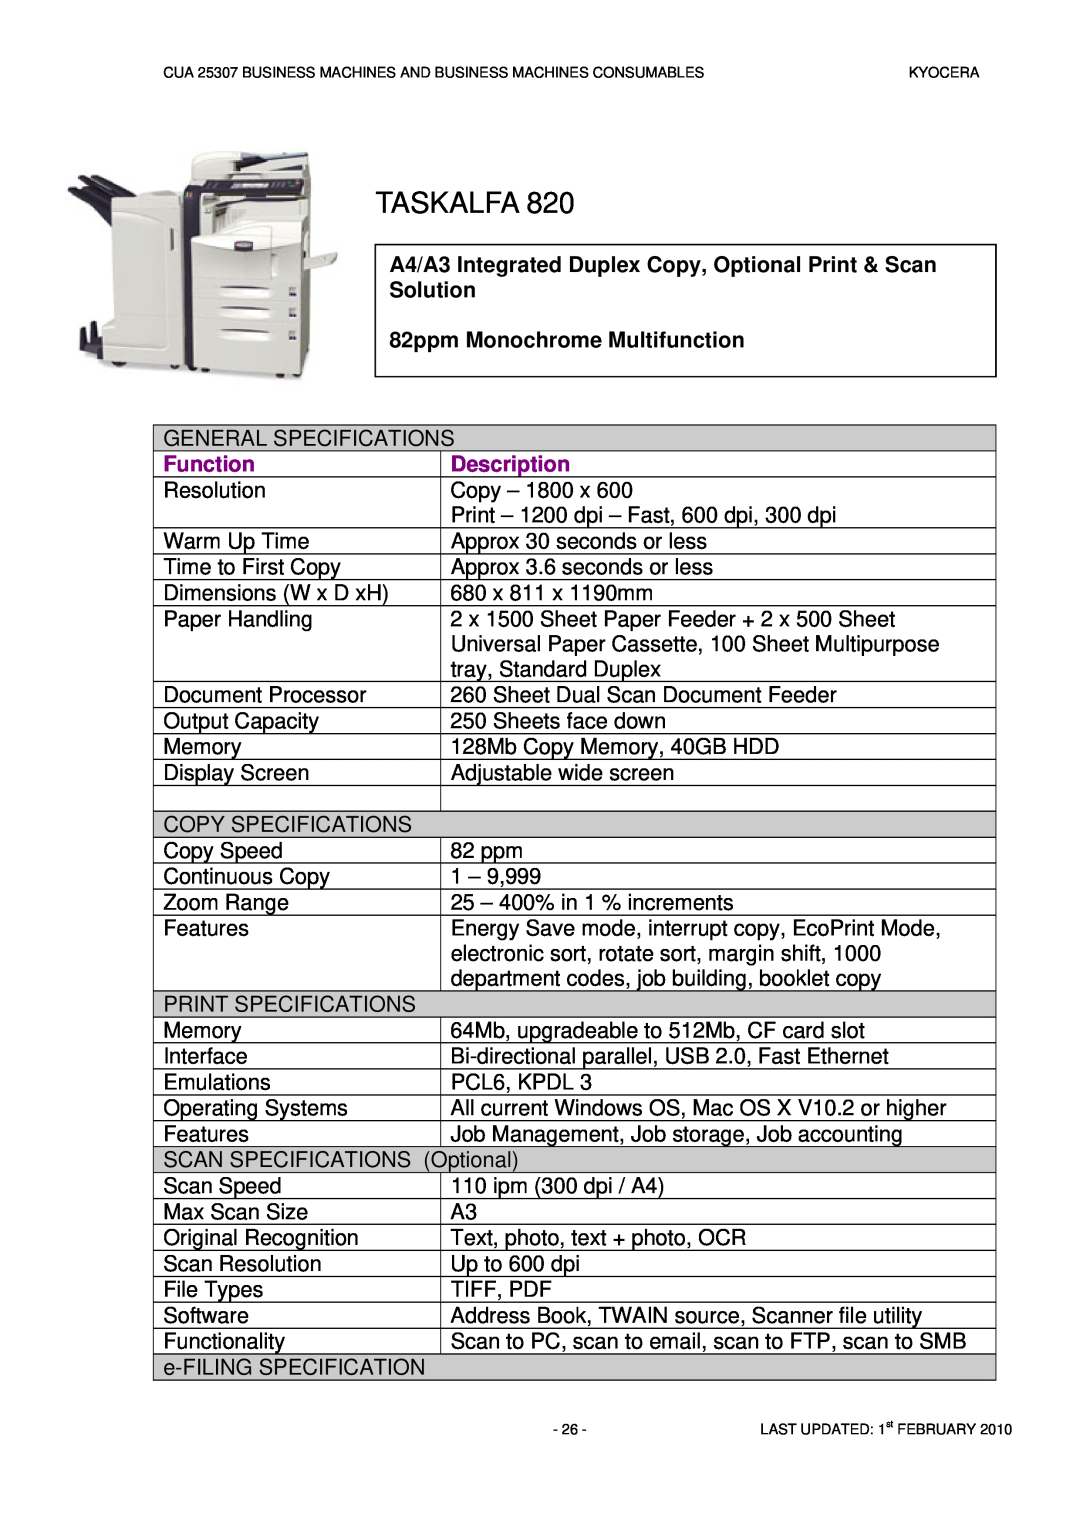 Kyocera CUA 25307 manual Solution 82ppm Monochrome Multifunction, Taskalfa, Function, Description 